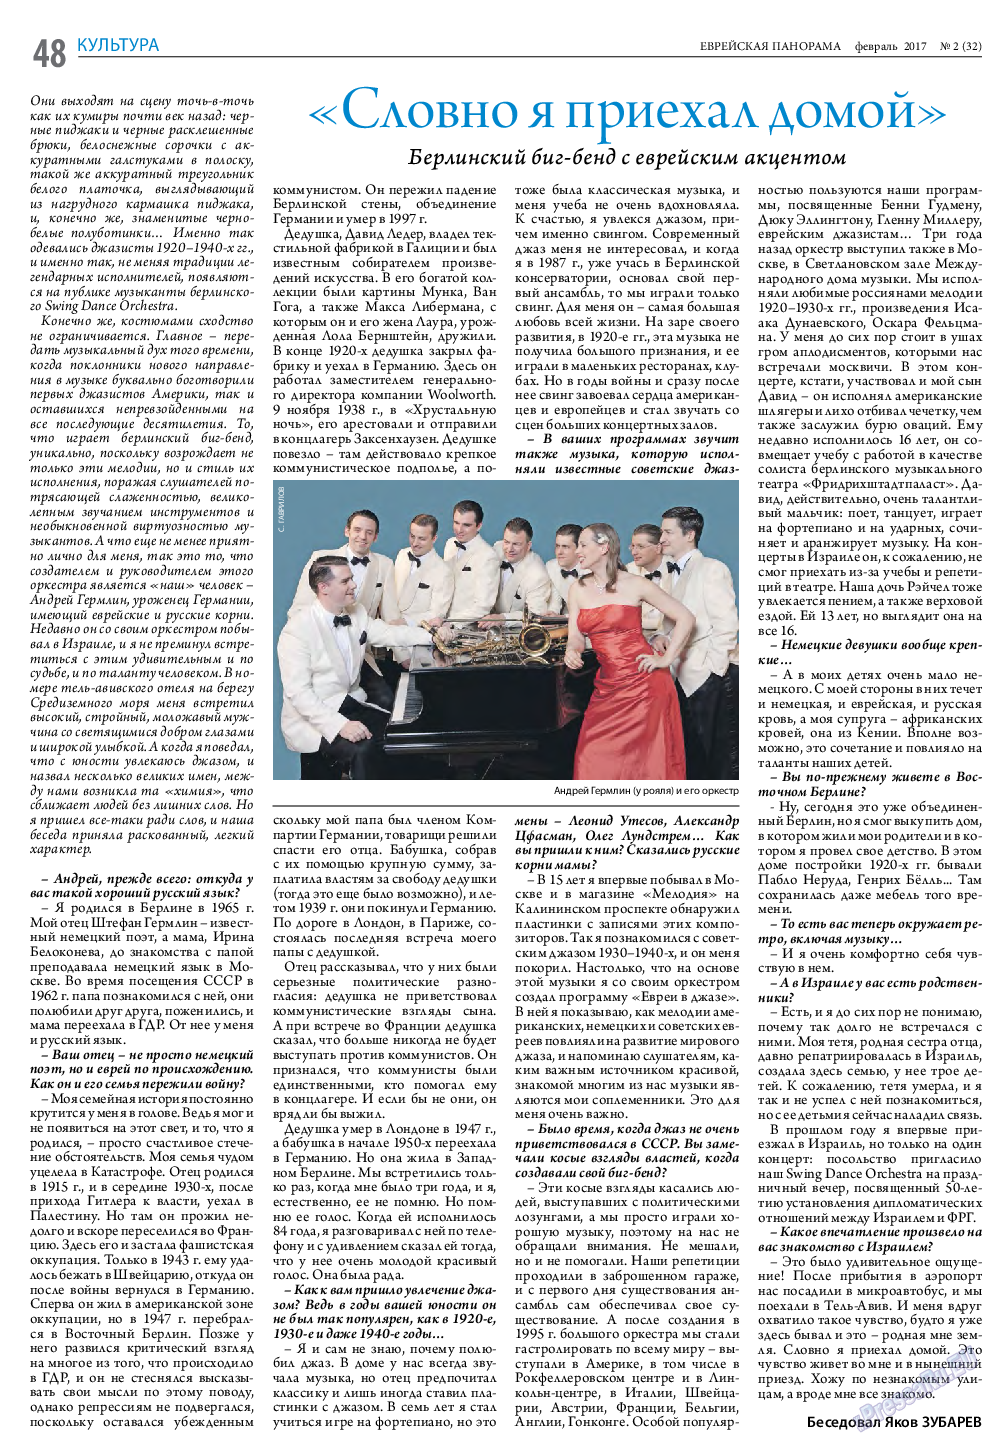 Еврейская панорама, газета. 2017 №2 стр.48